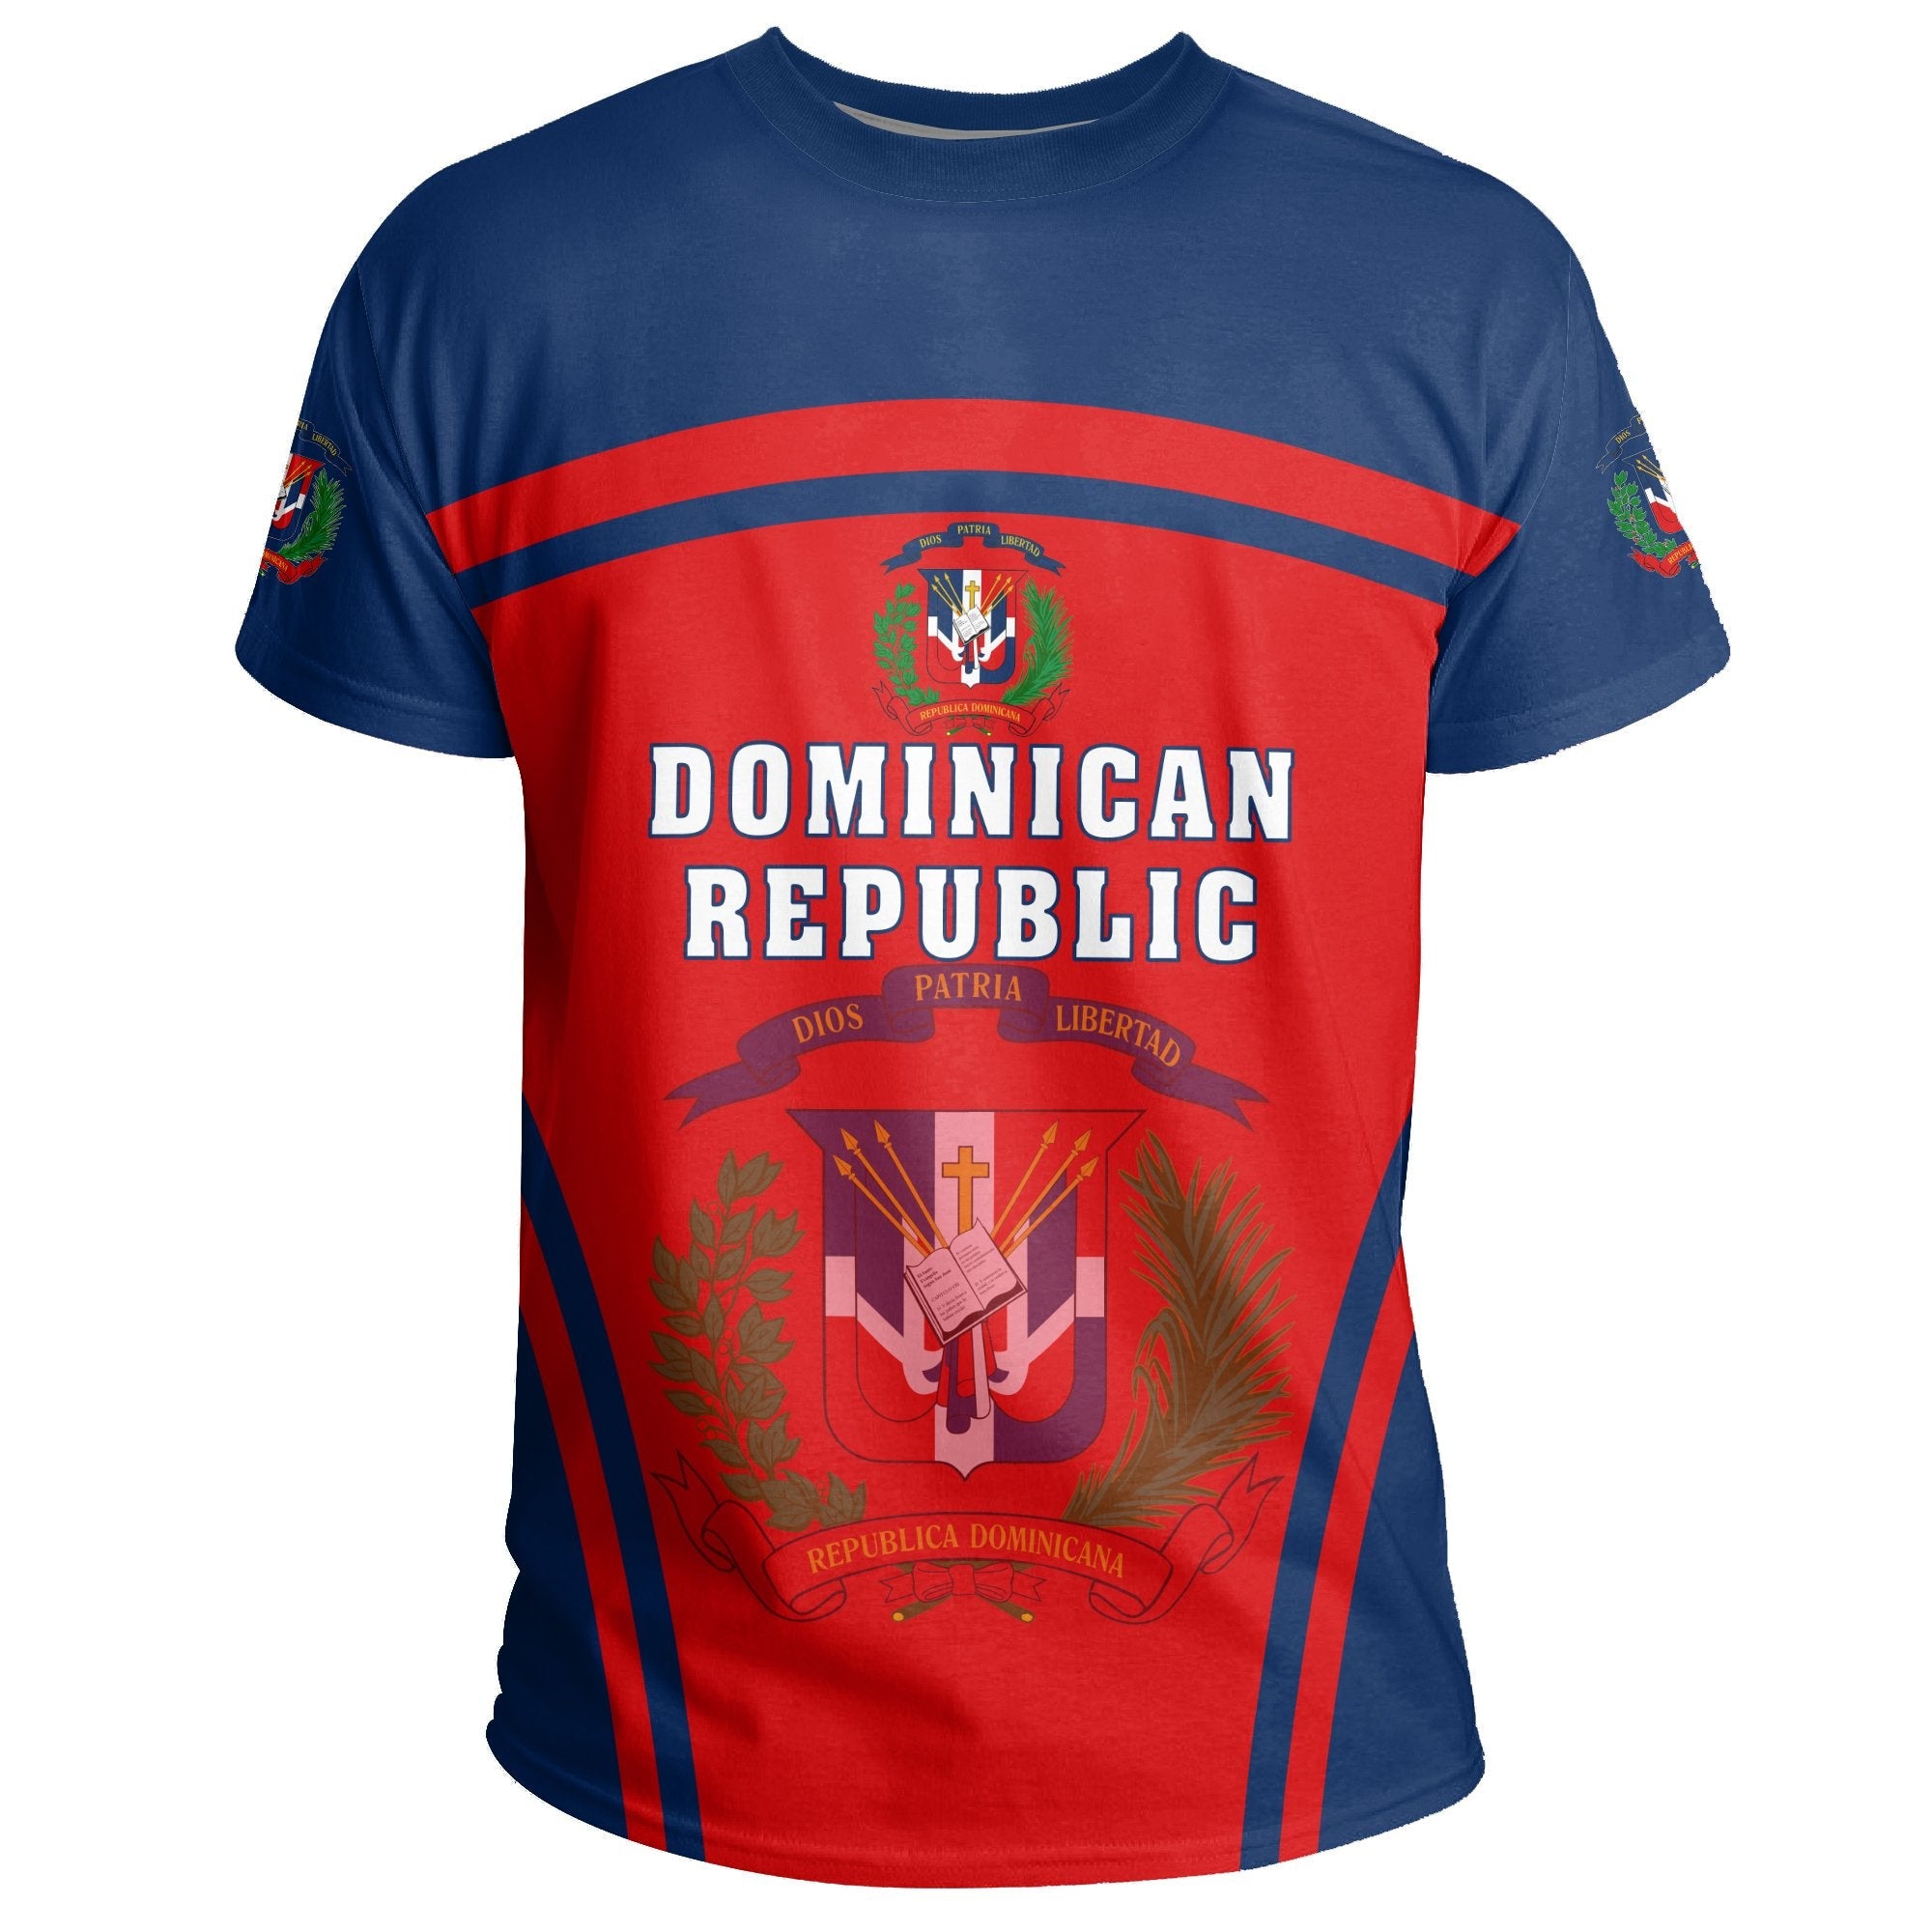 dominican-republic-t-shirt-sport-style